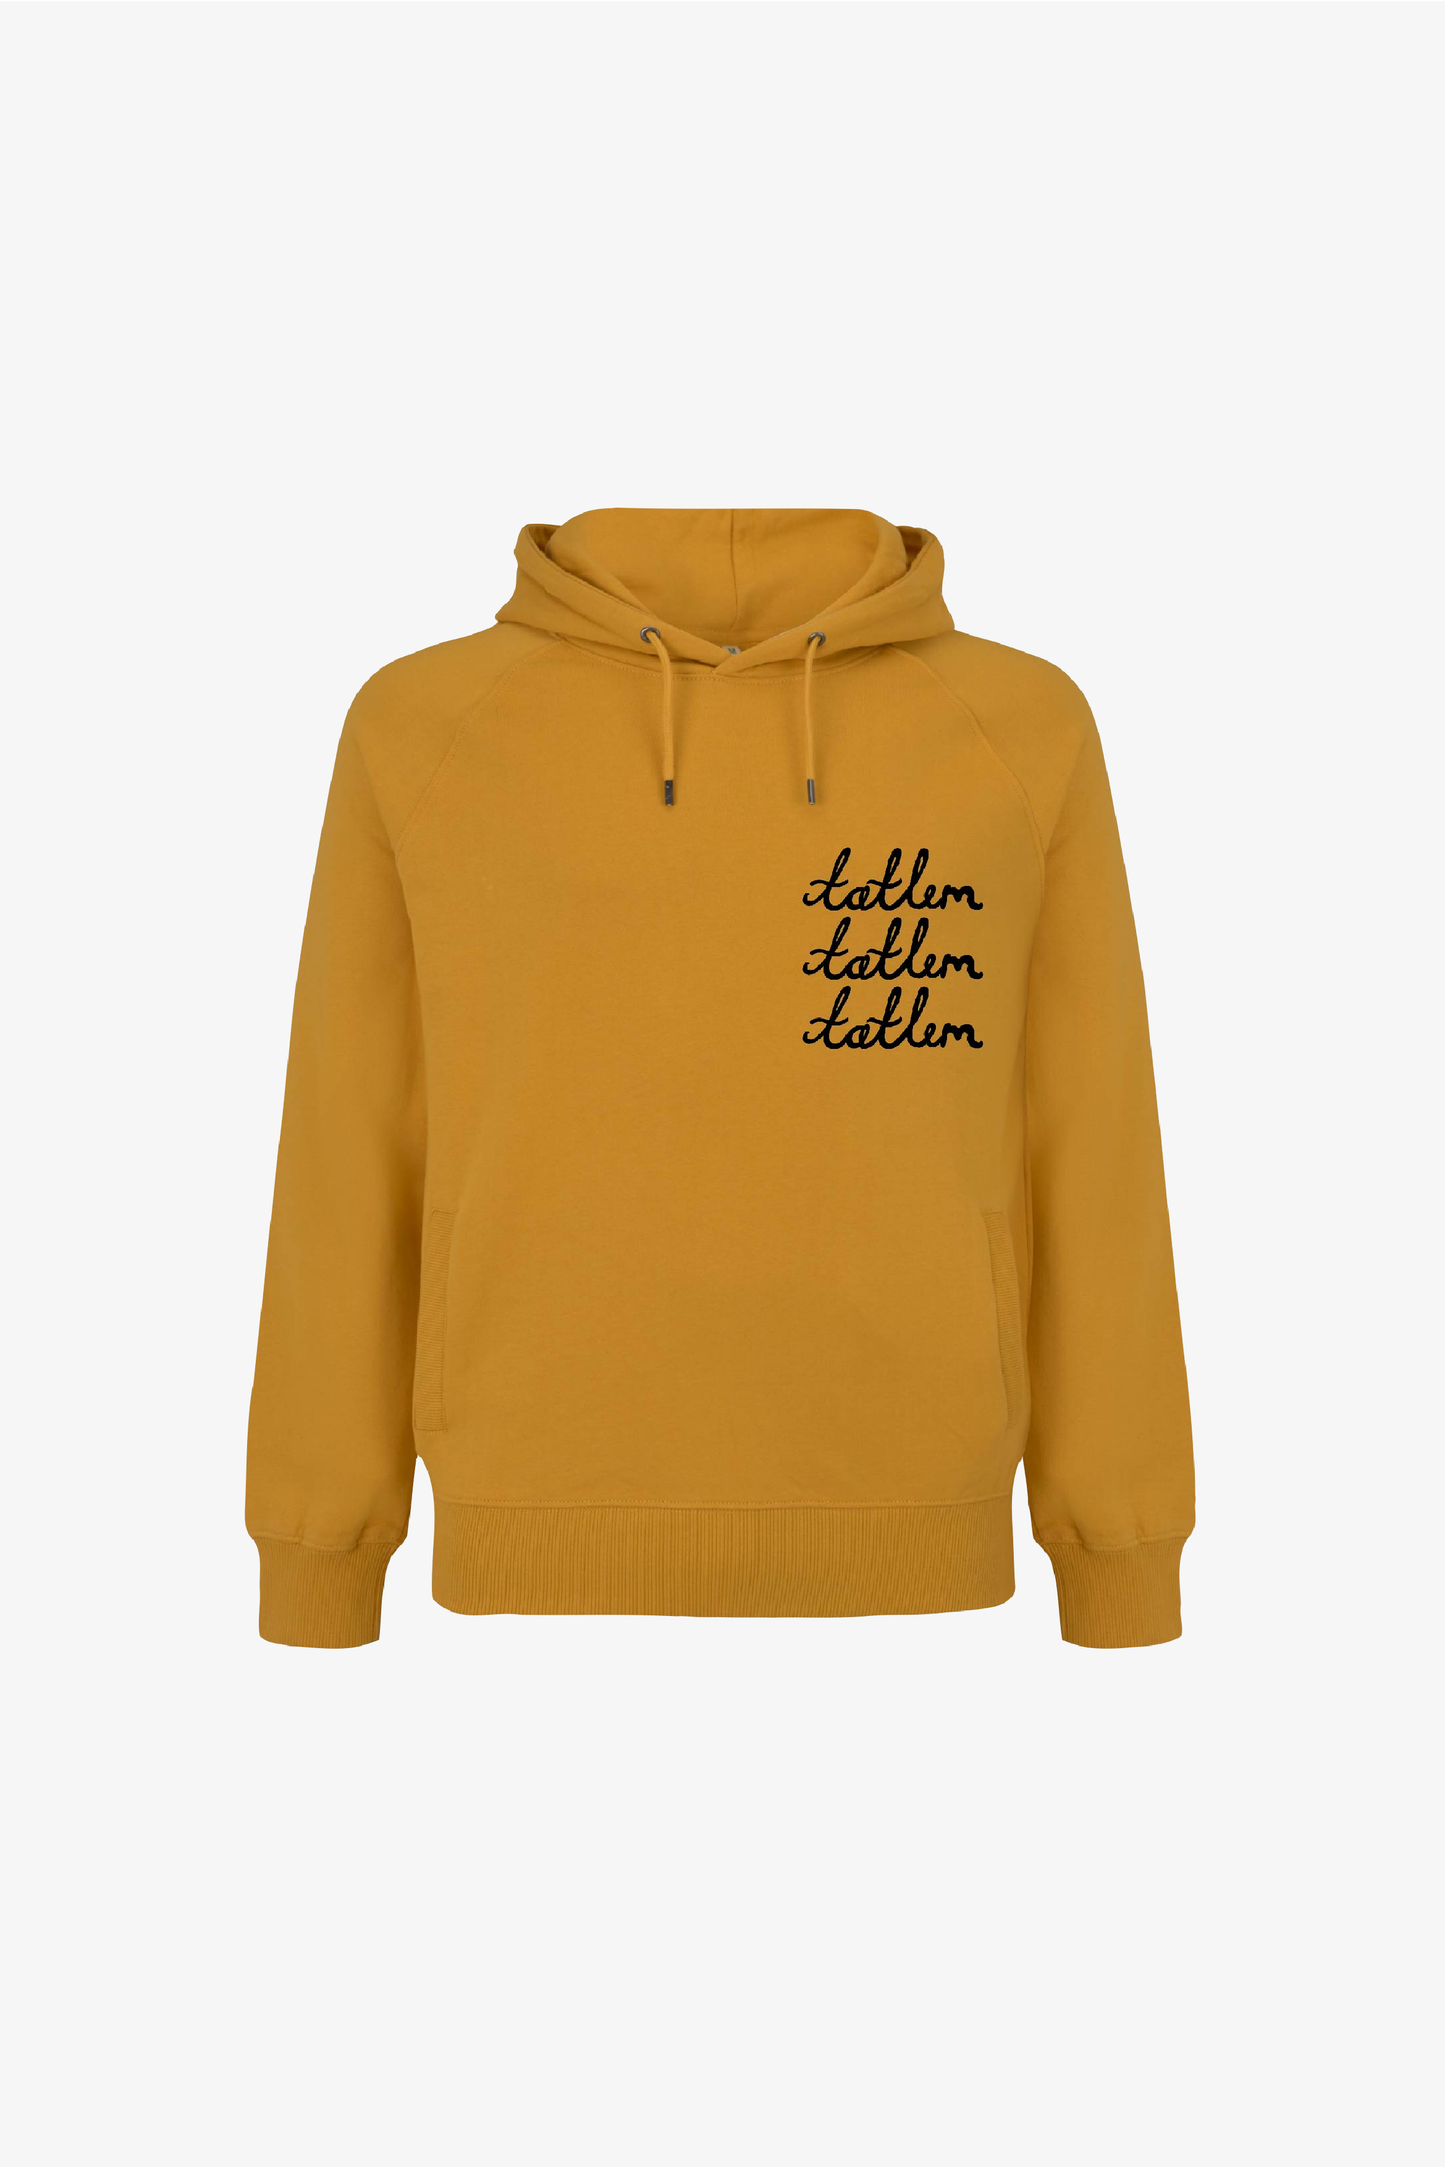 Mustard Triple Tatlim Hooded Sweatshirt